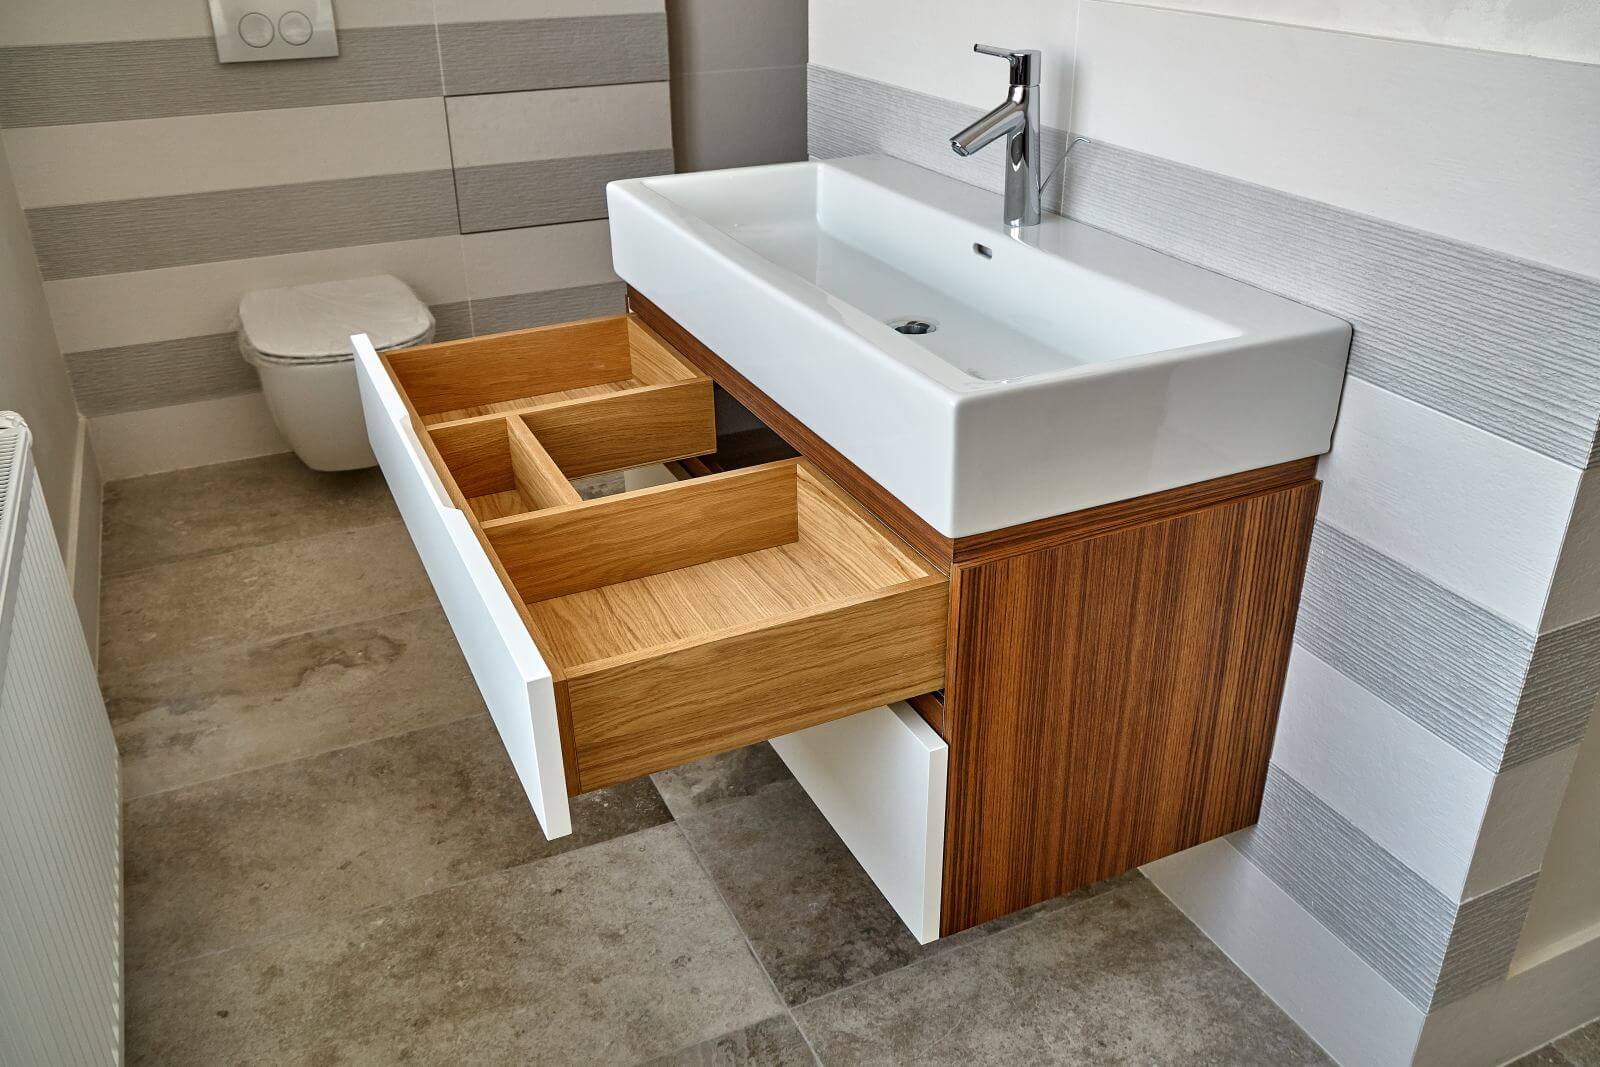 Bathroom console sink vanity in luxury bathroom with teak floor and striped tiles. Stylish interior of modern bathroom. Details furniture